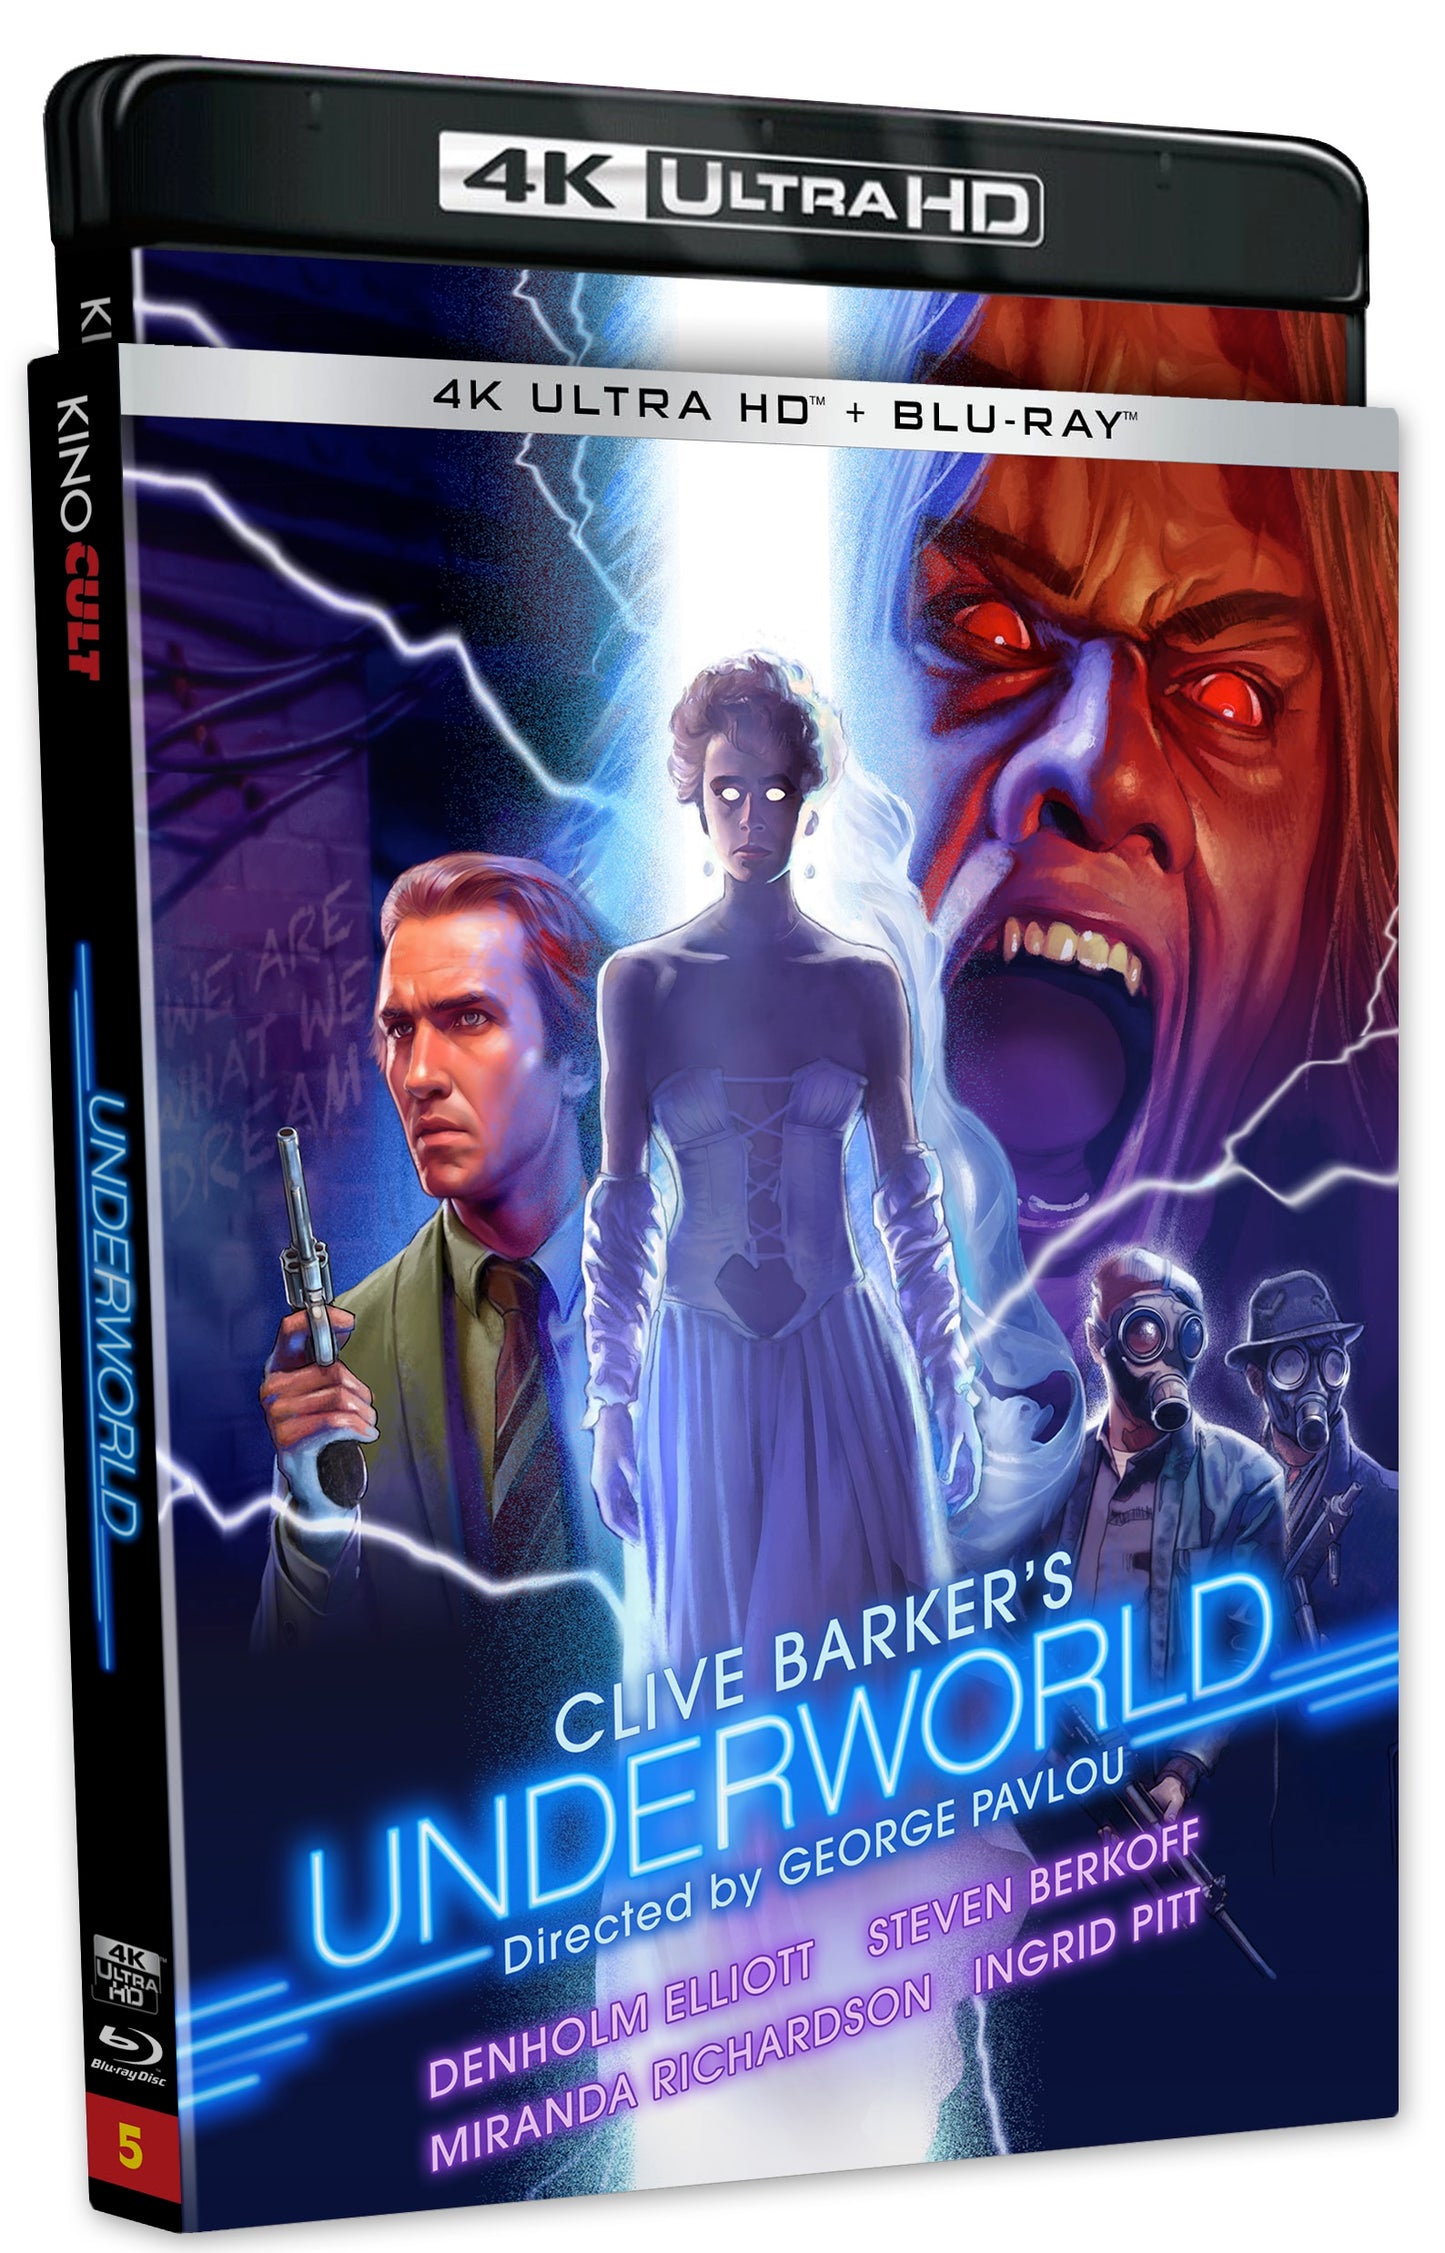 Underworld (AKA Transmutations) 4K UHD + Blu-ray with Slipcover (Kino Lorber)